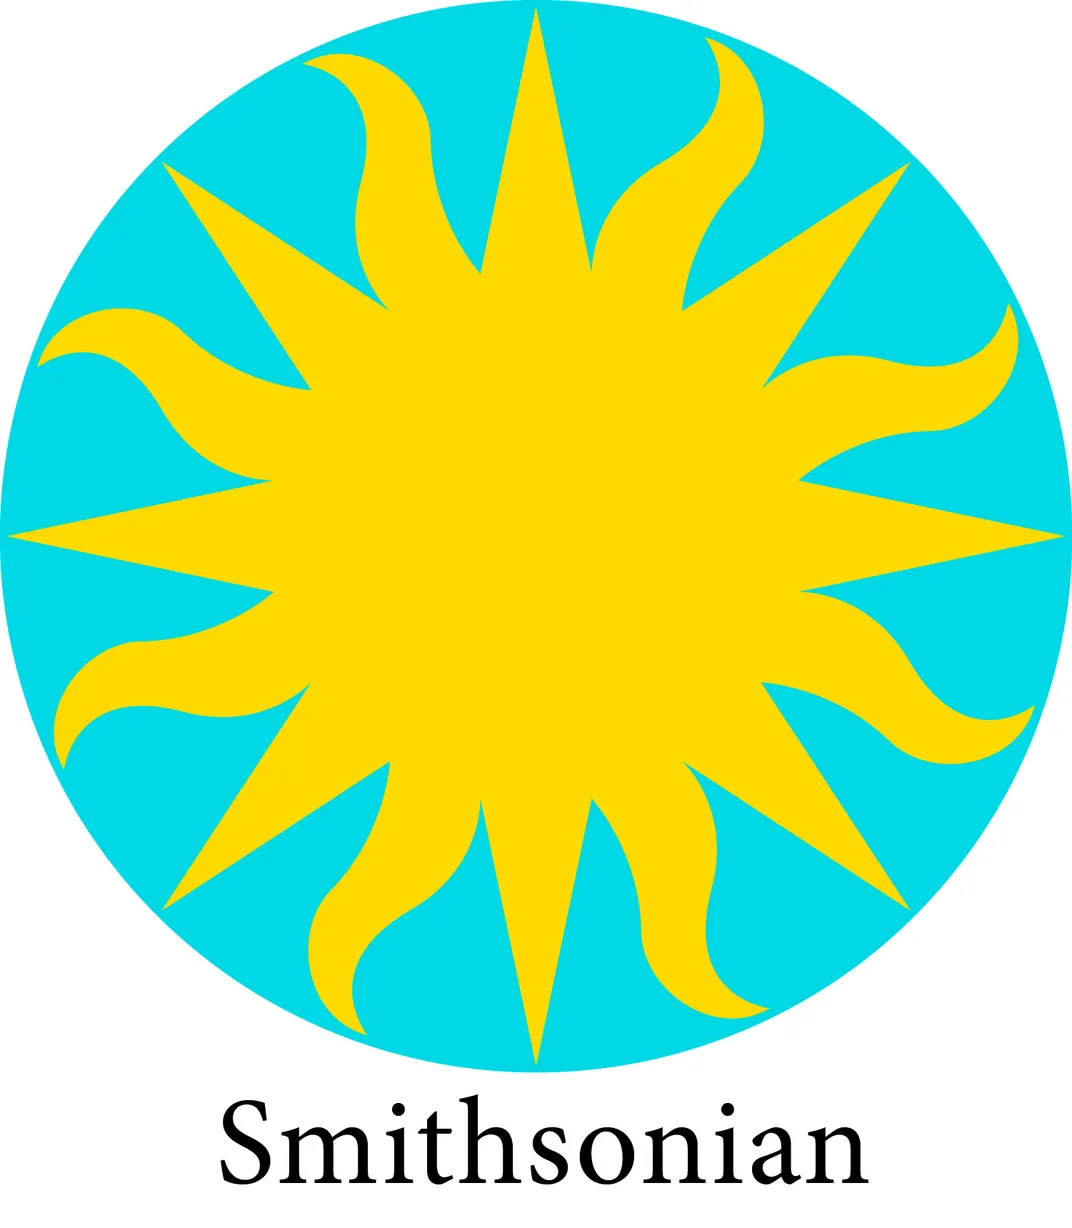 Designer of the Smithsonian Sunburst Logo Dies